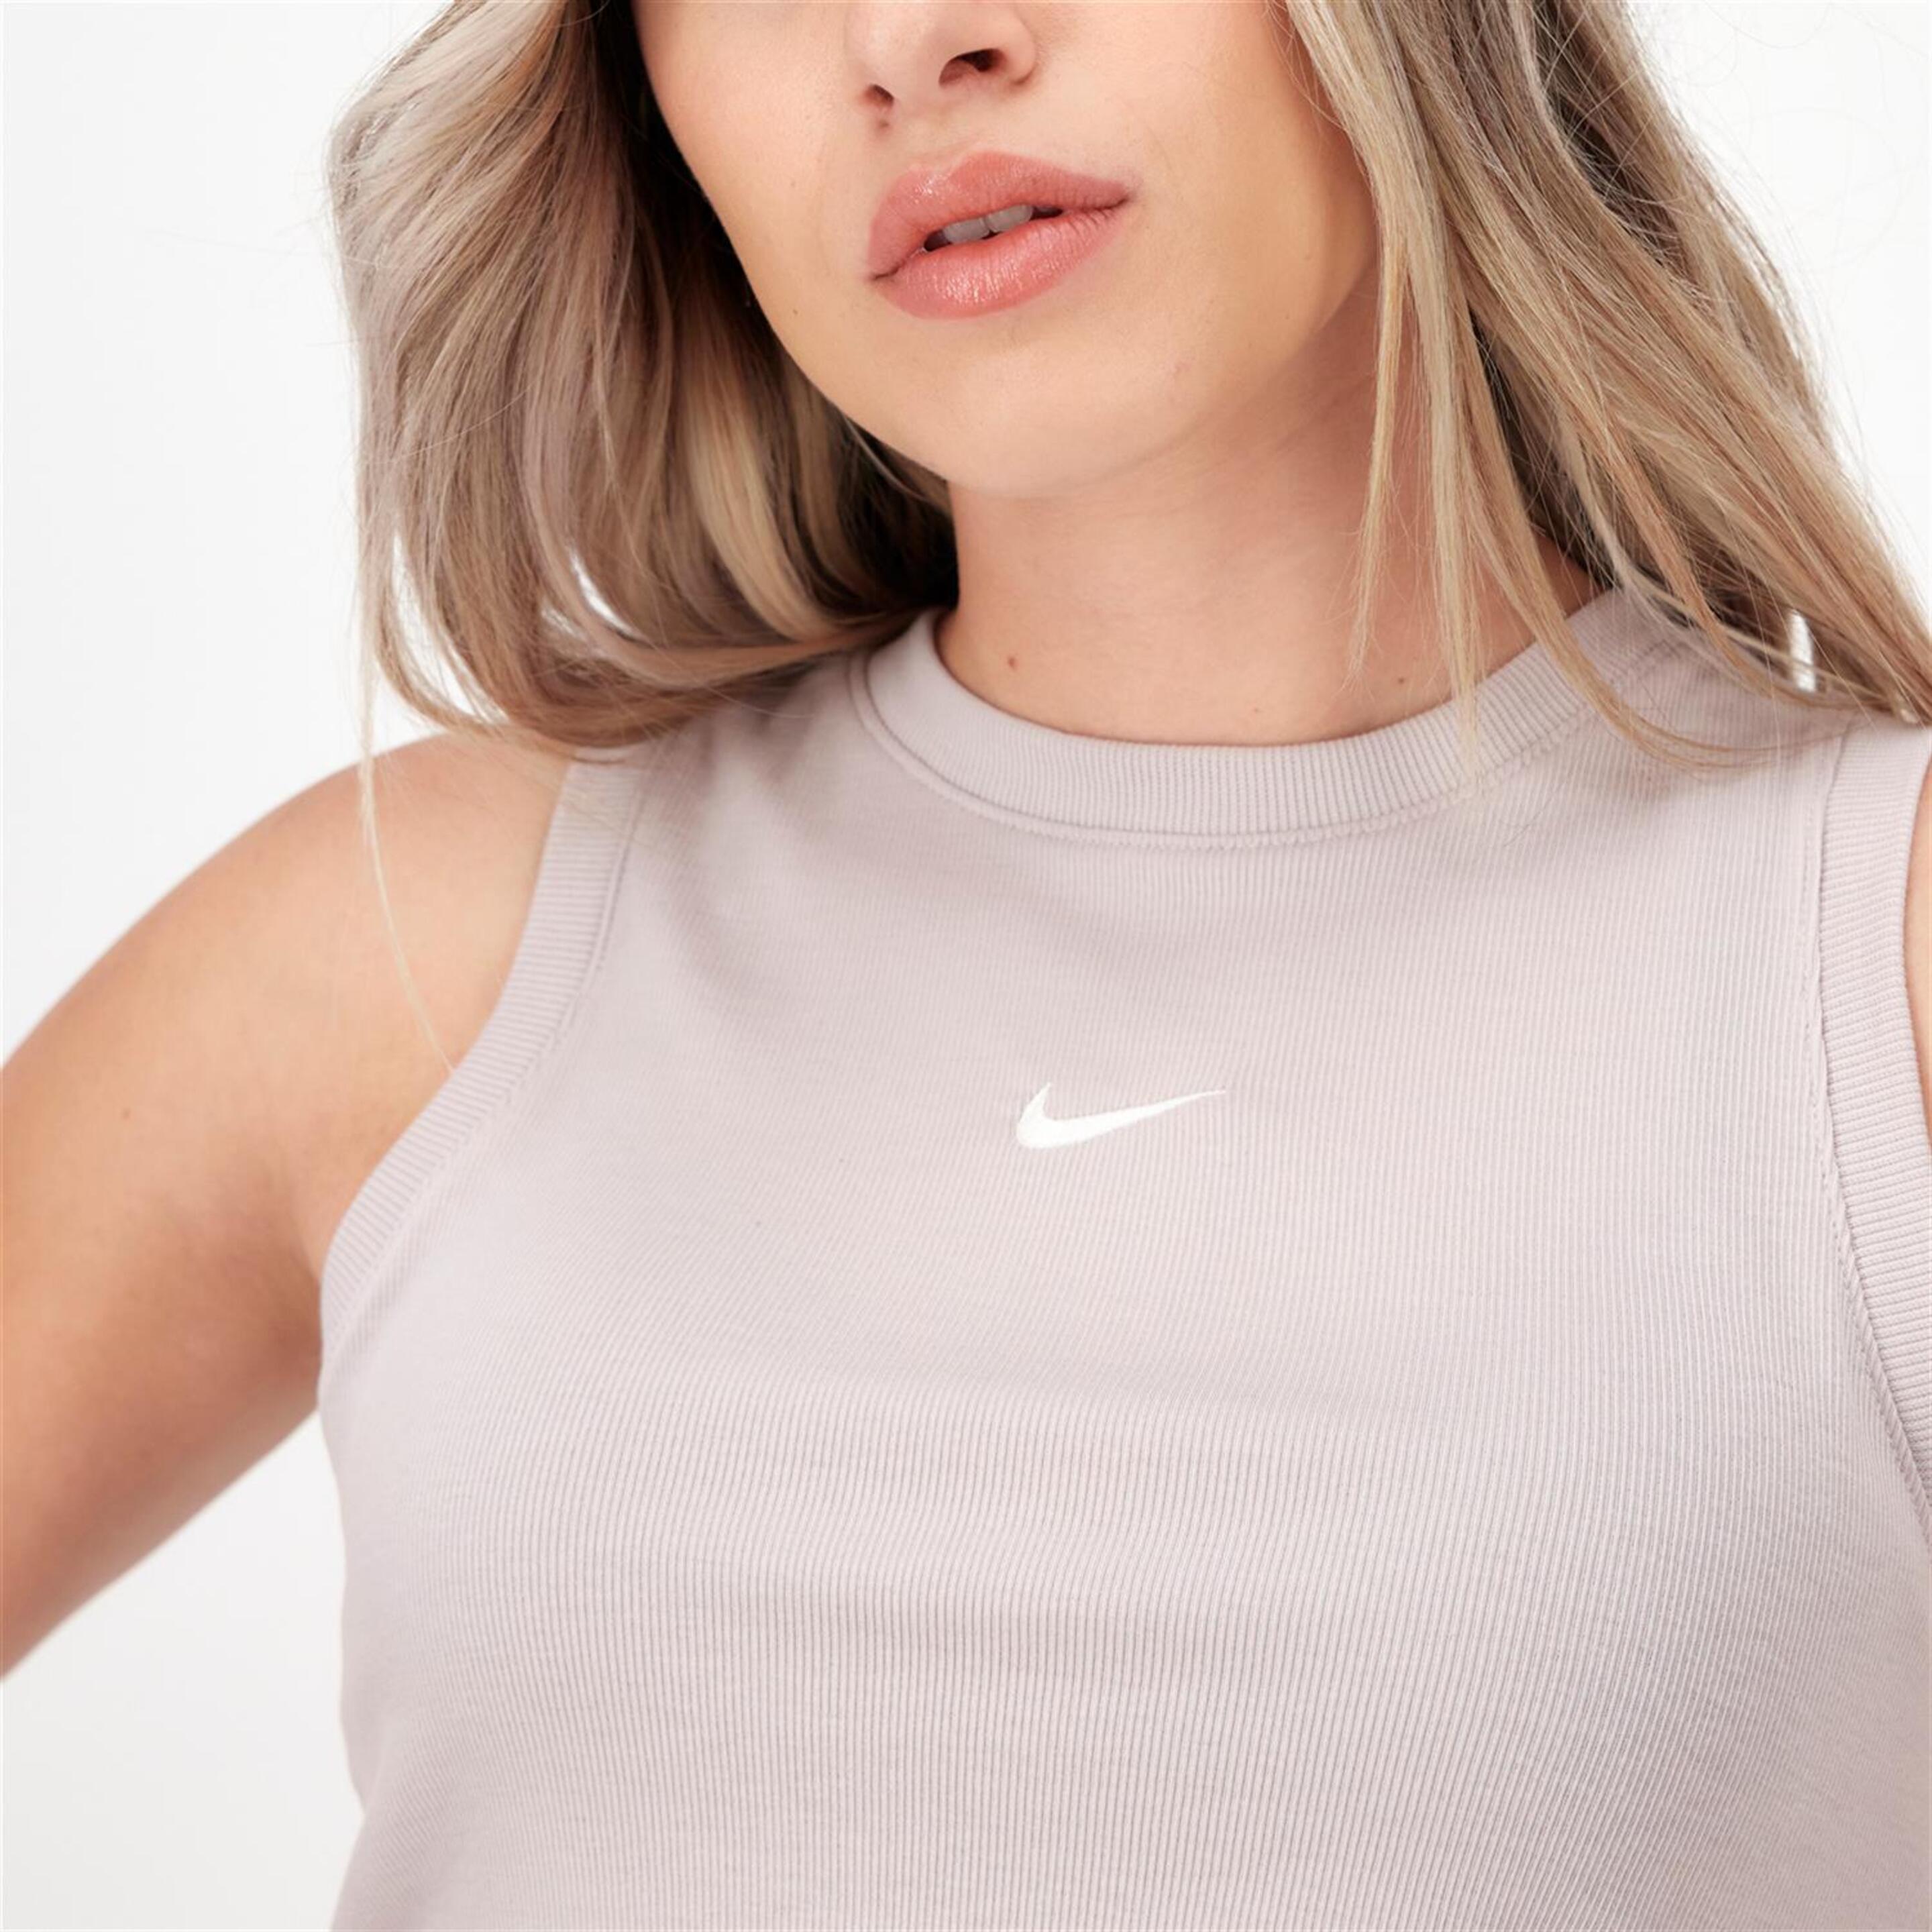 Camiseta Nike - Plateado - Crop Top Mujer